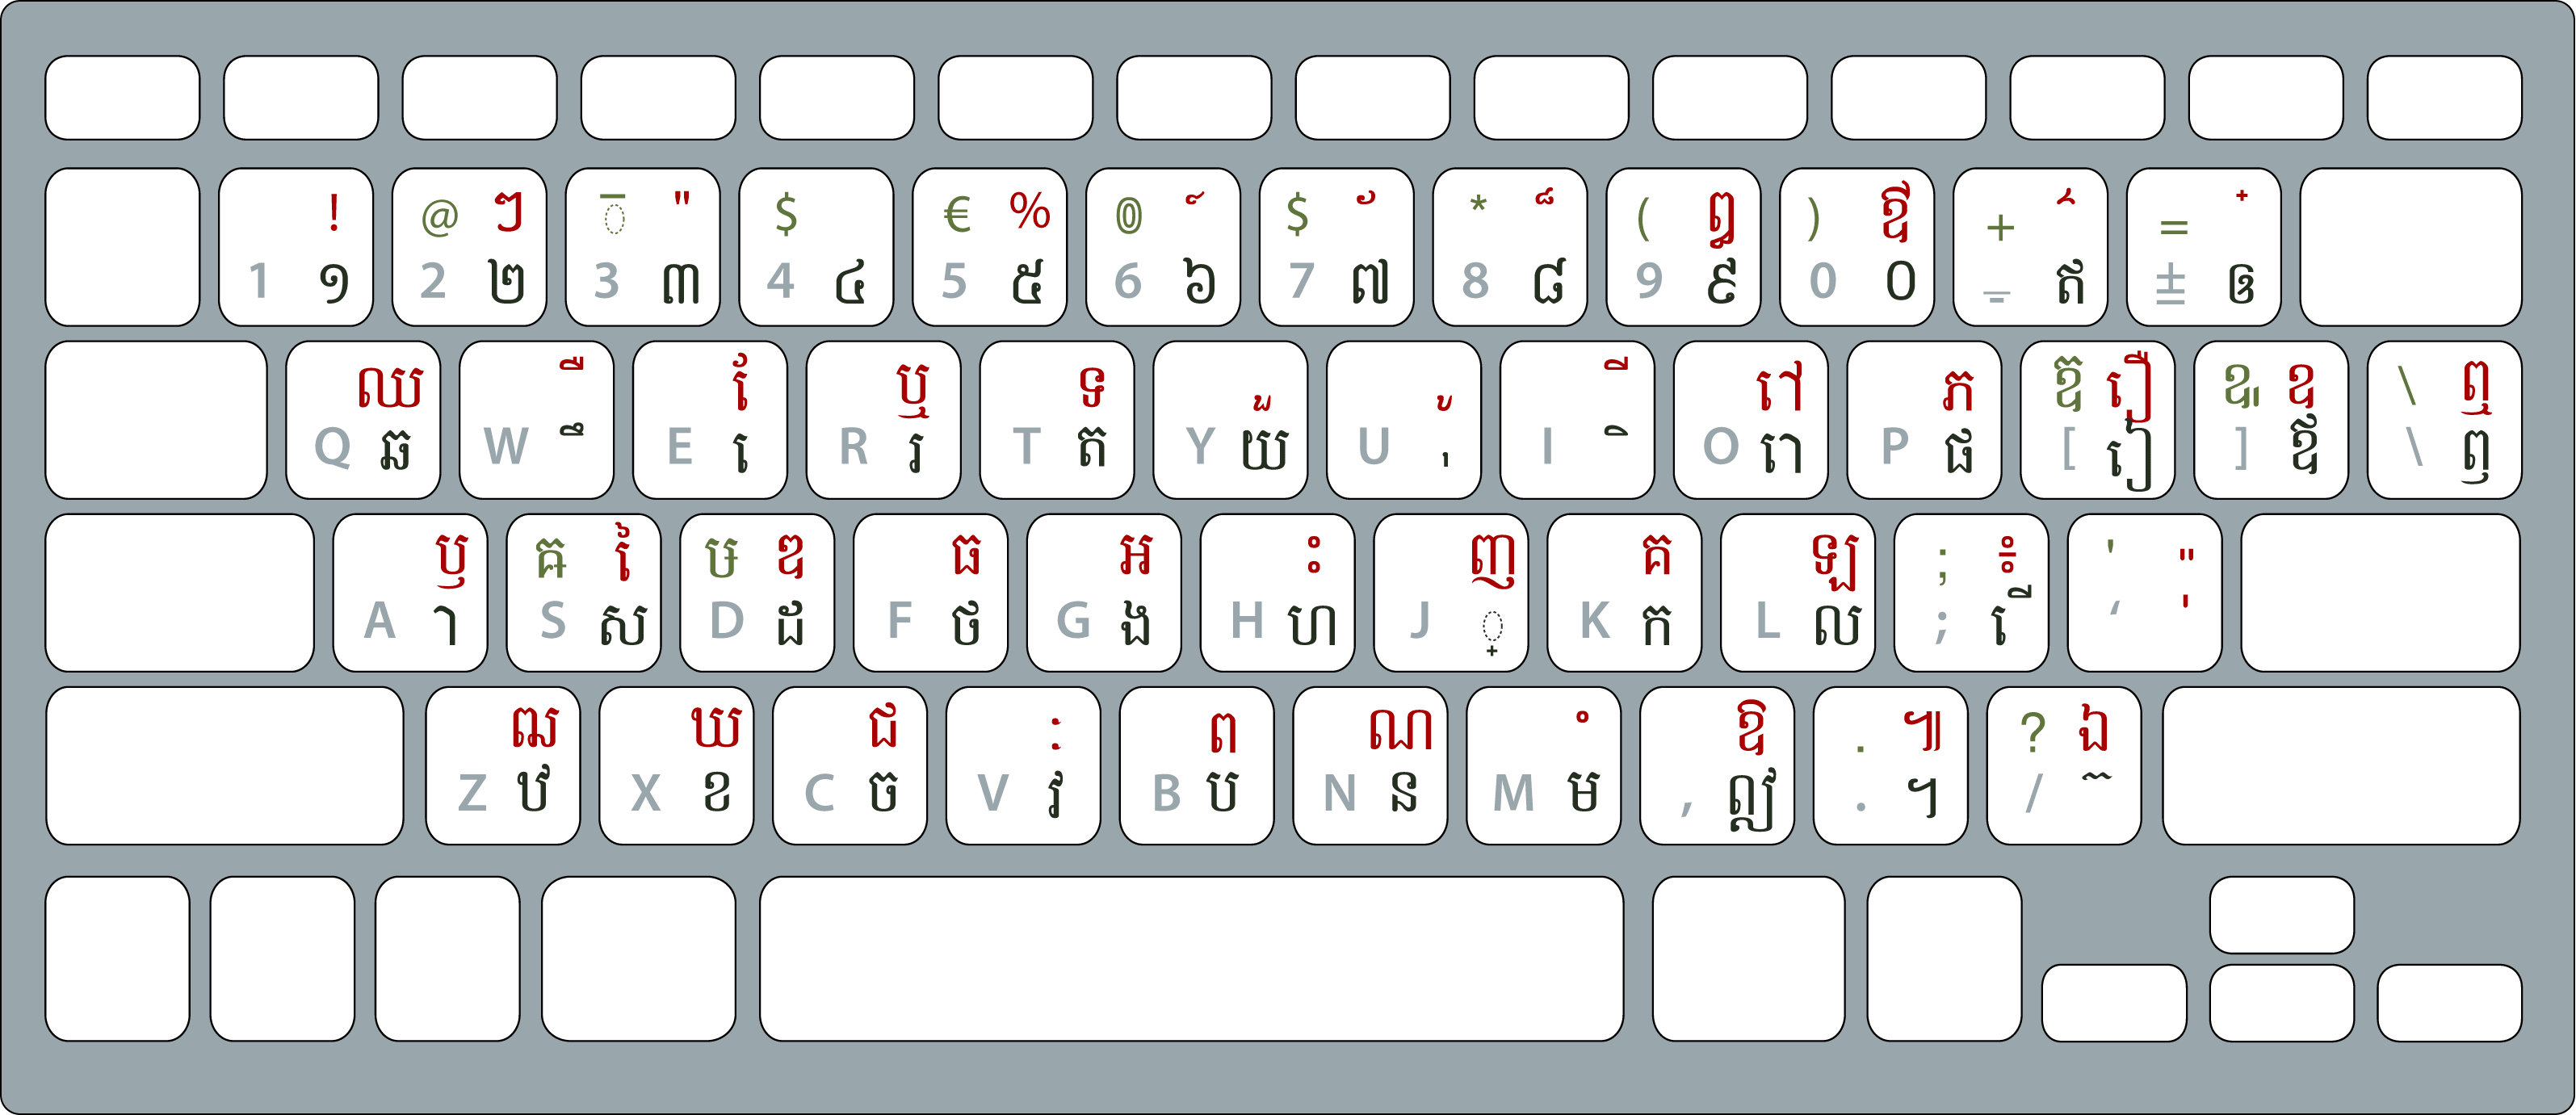 khmer unicode keyboard layout for mac